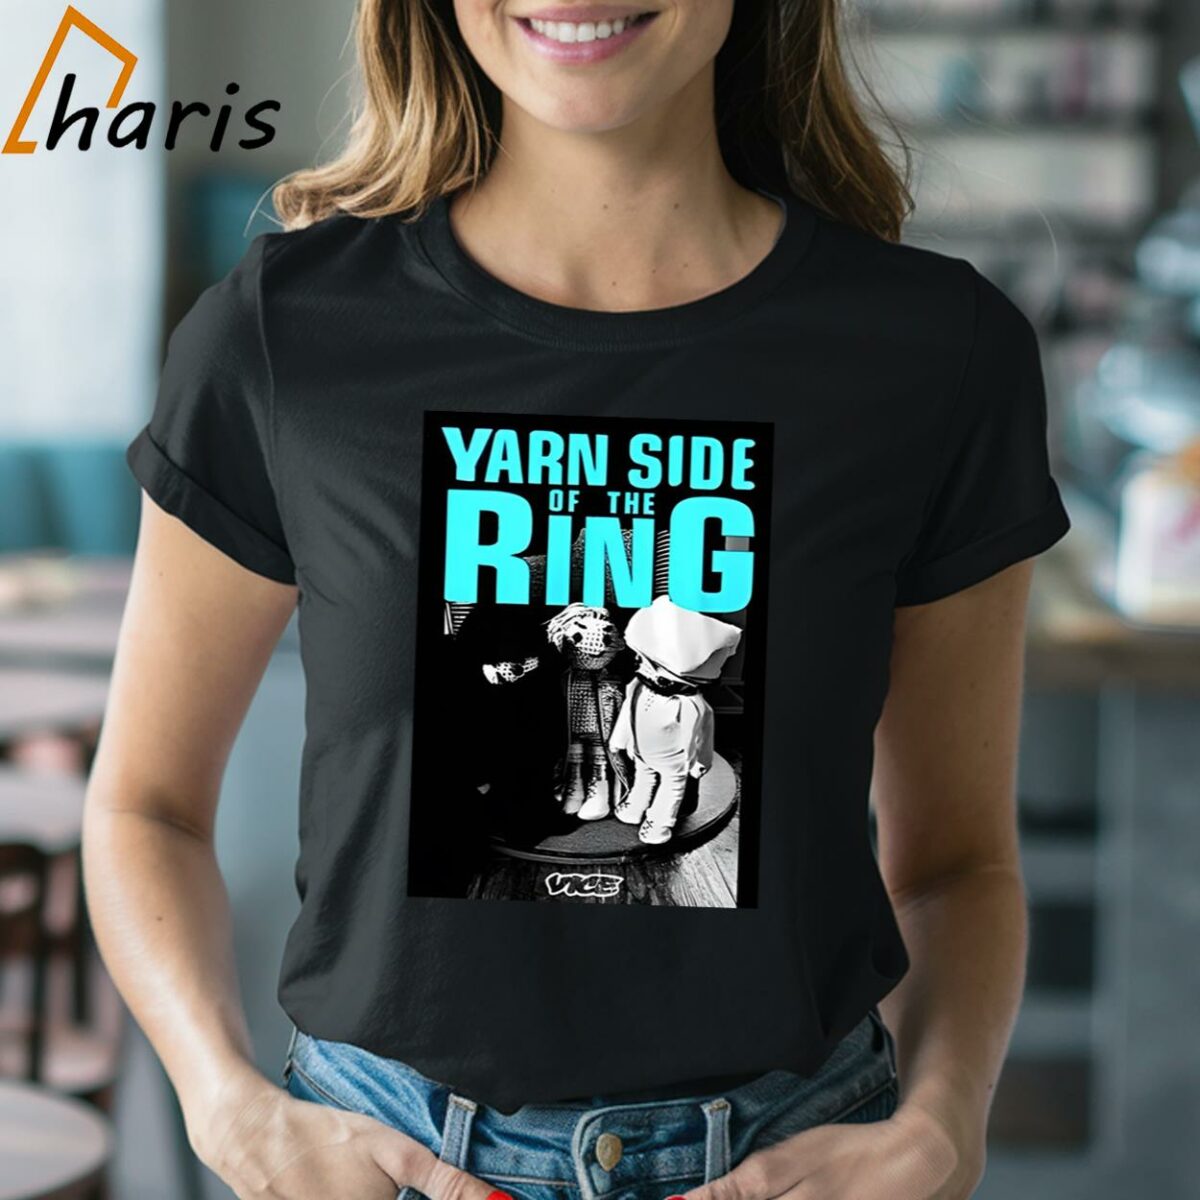 Yarngate Yarn Side Of The Ring Vice T shirt 2 Shirt